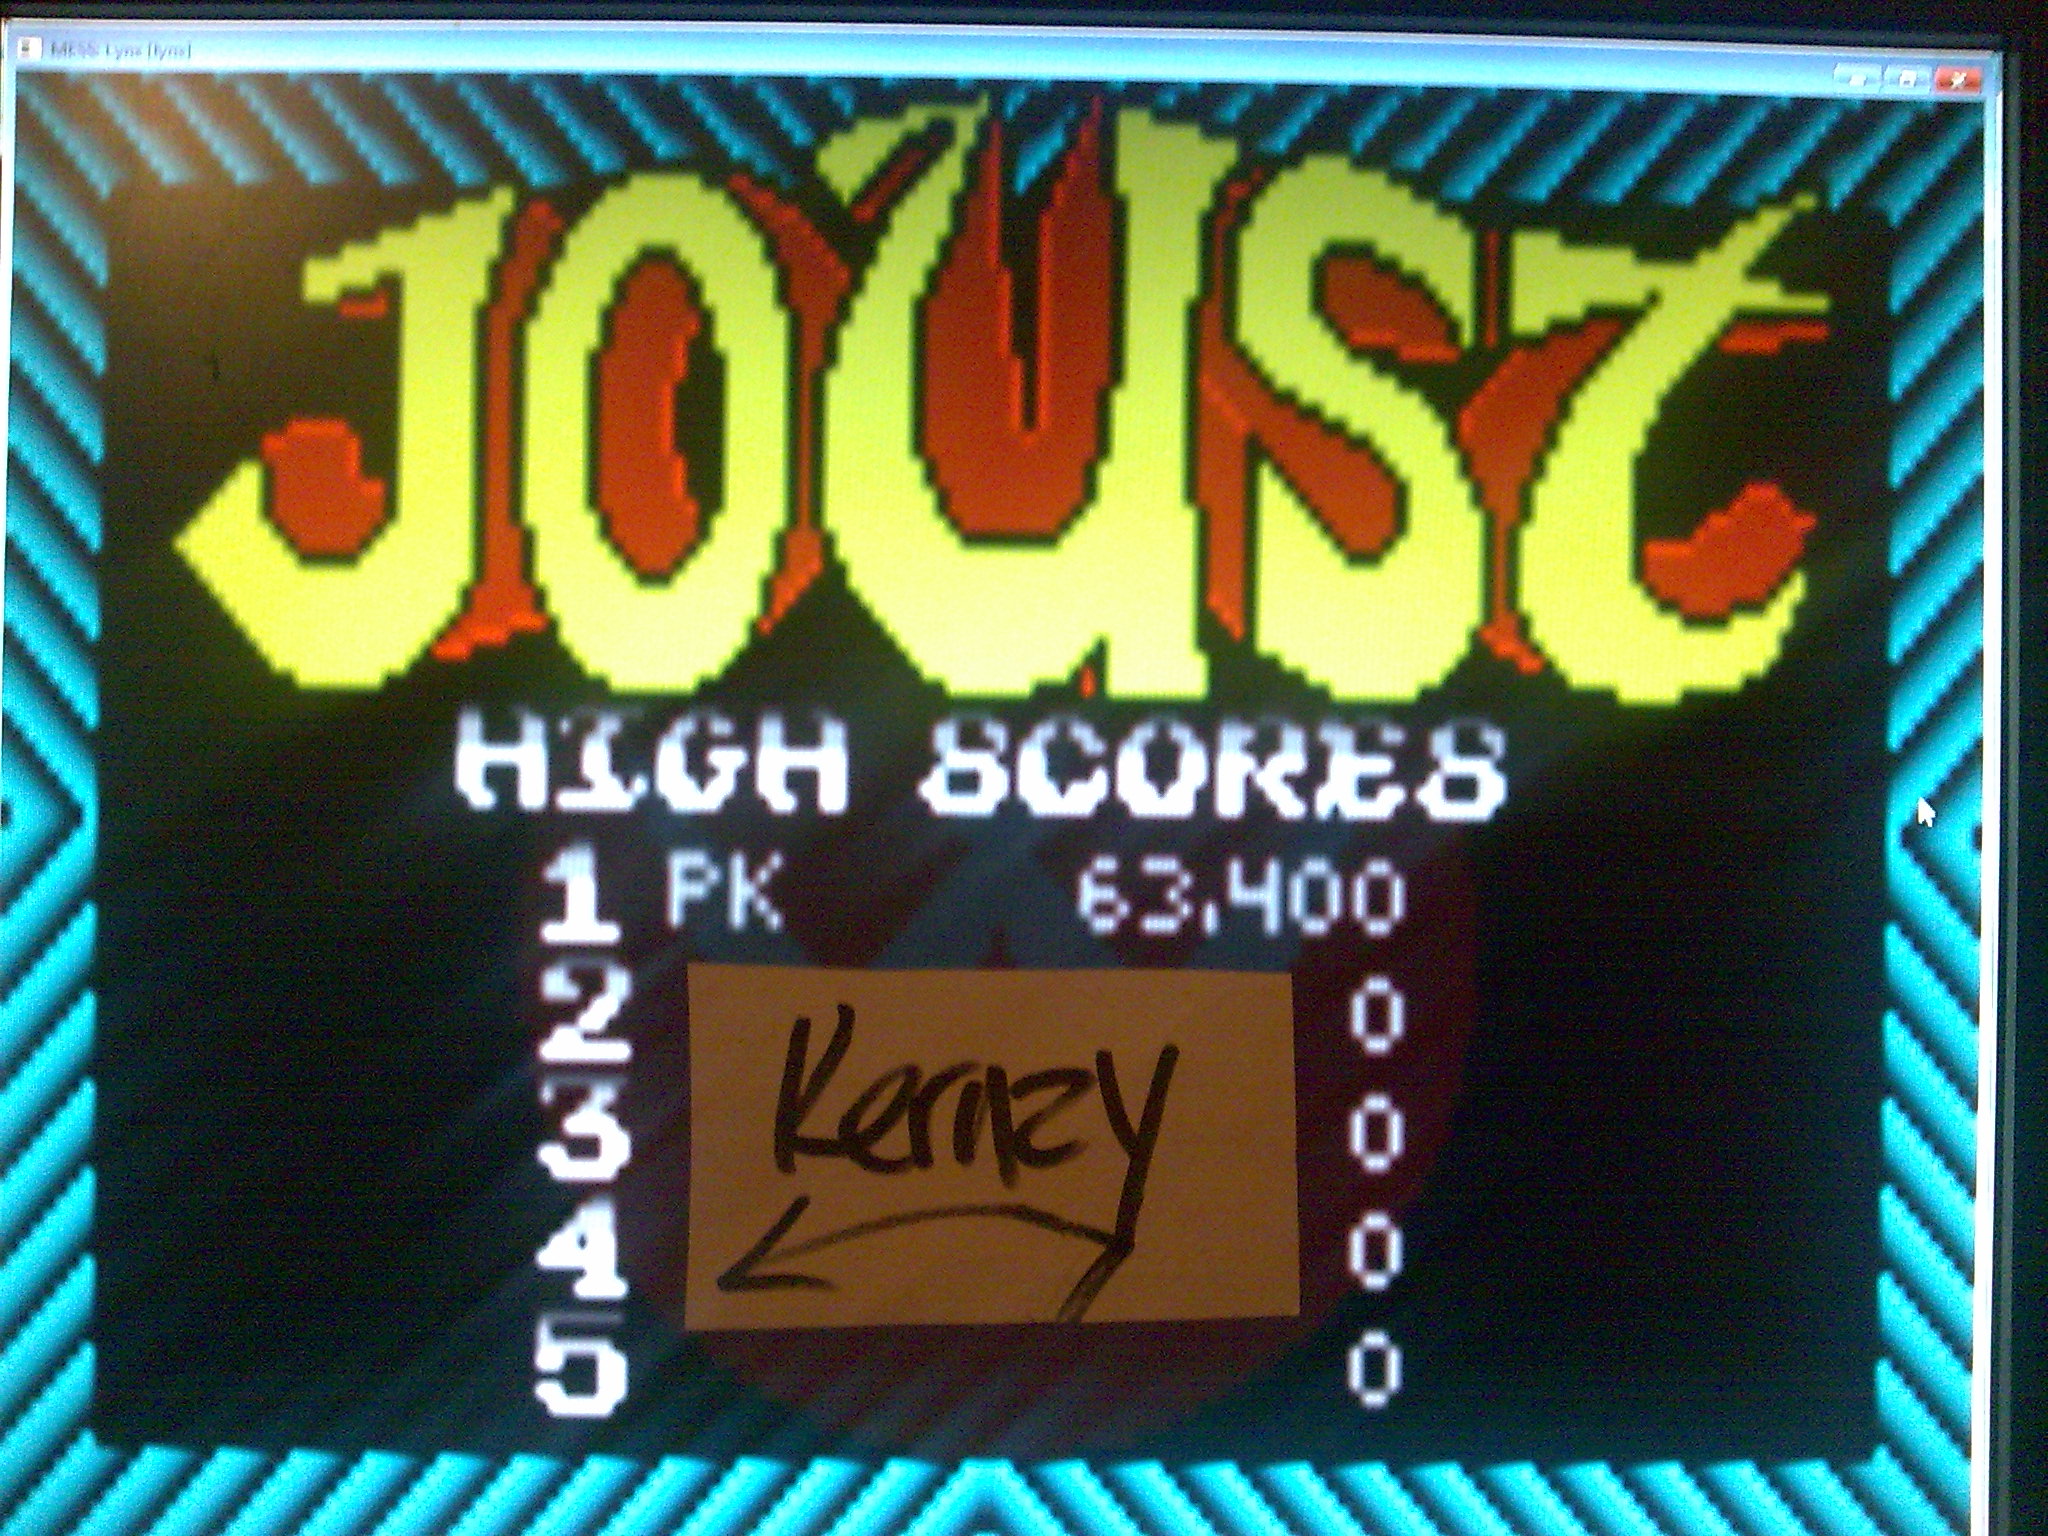 kernzy: Joust (Atari Lynx Emulated) 63,400 points on 2014-11-12 04:59:40